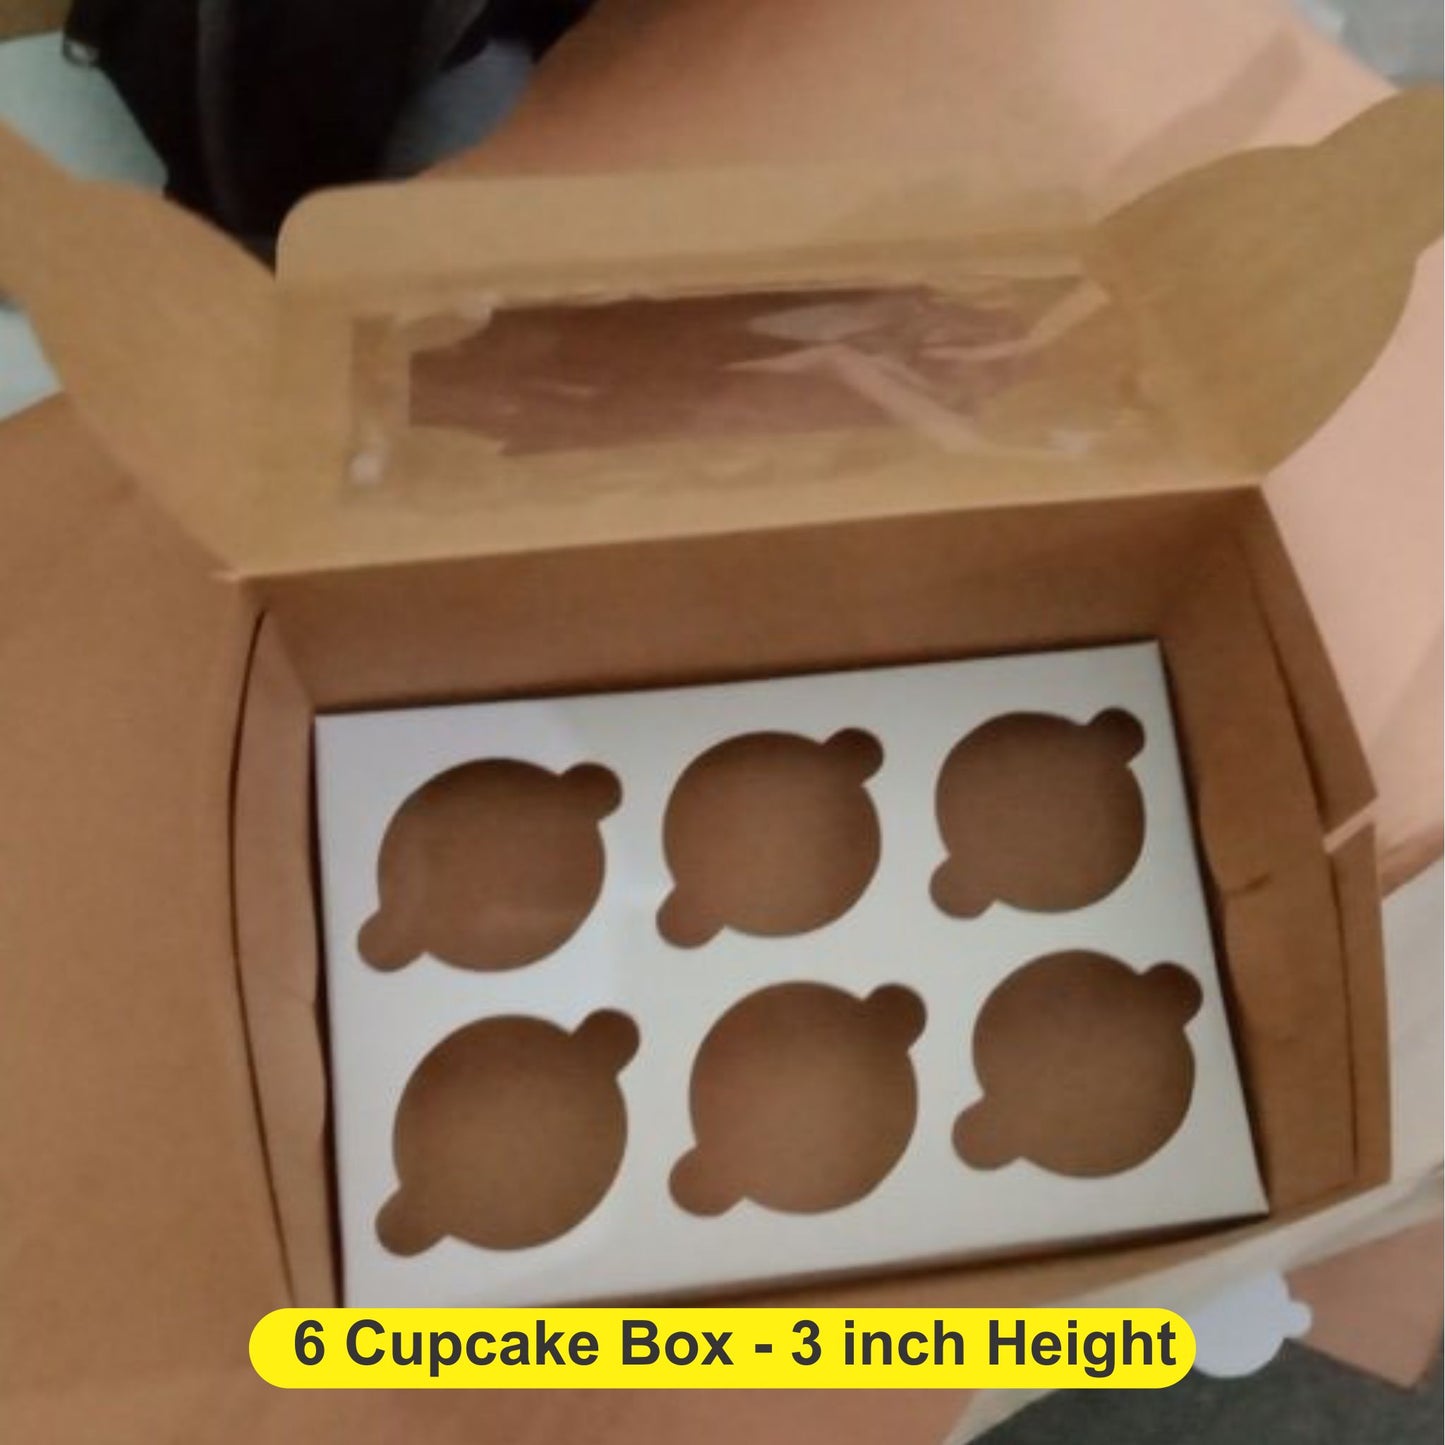 6 Cupcake Box - 3 inch height